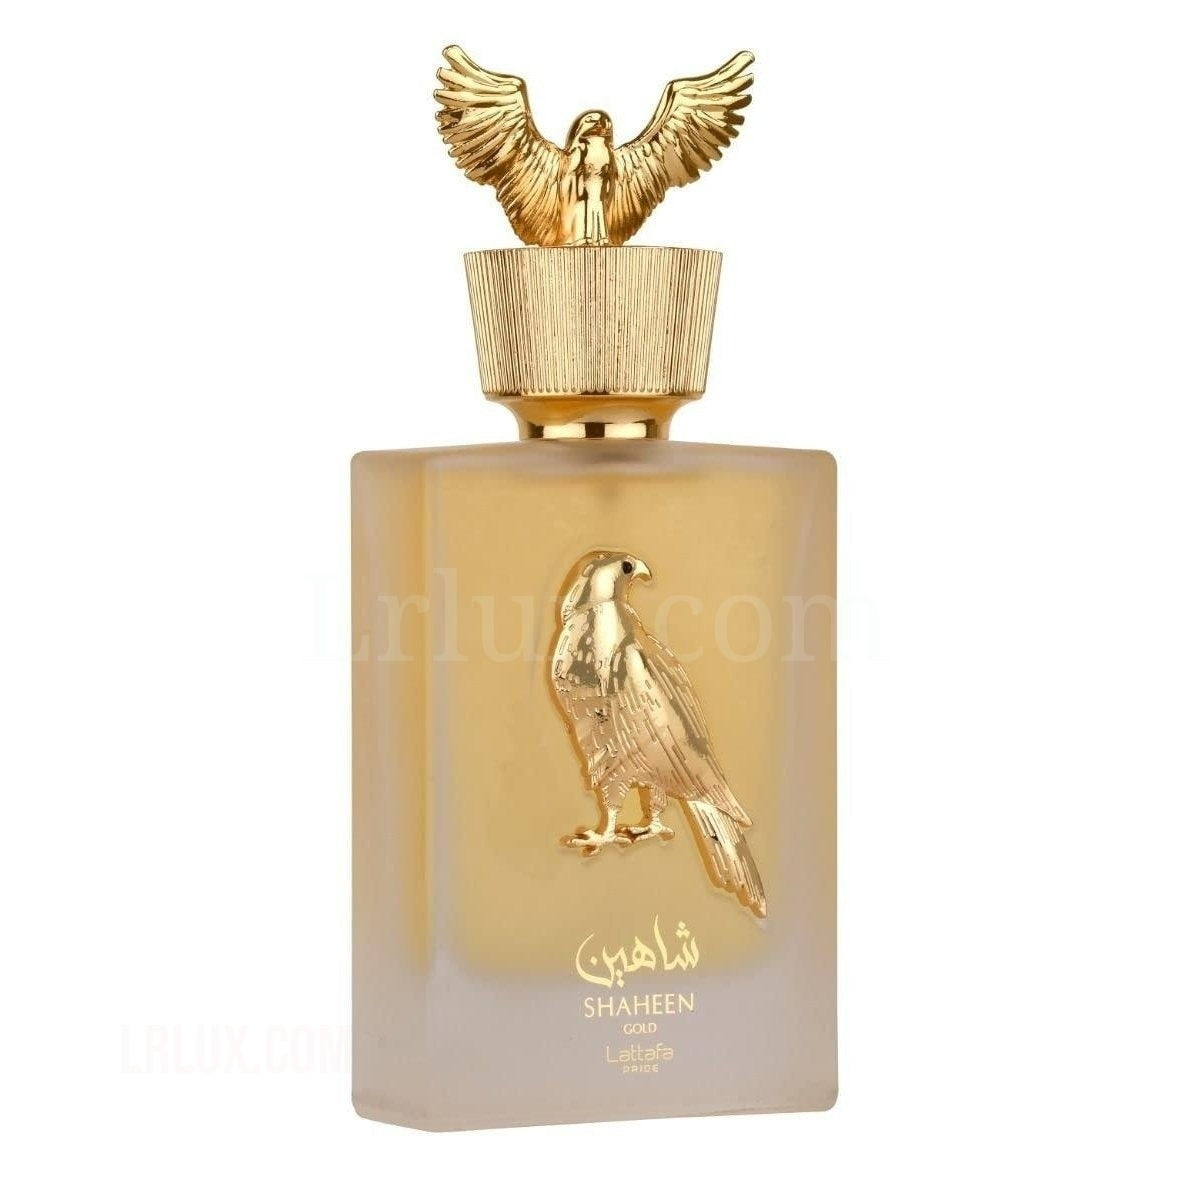 Shaheen Gold for Unisex Eau de Parfum Spray, 3.4 Ounce by Lattafa - Lrlux.com